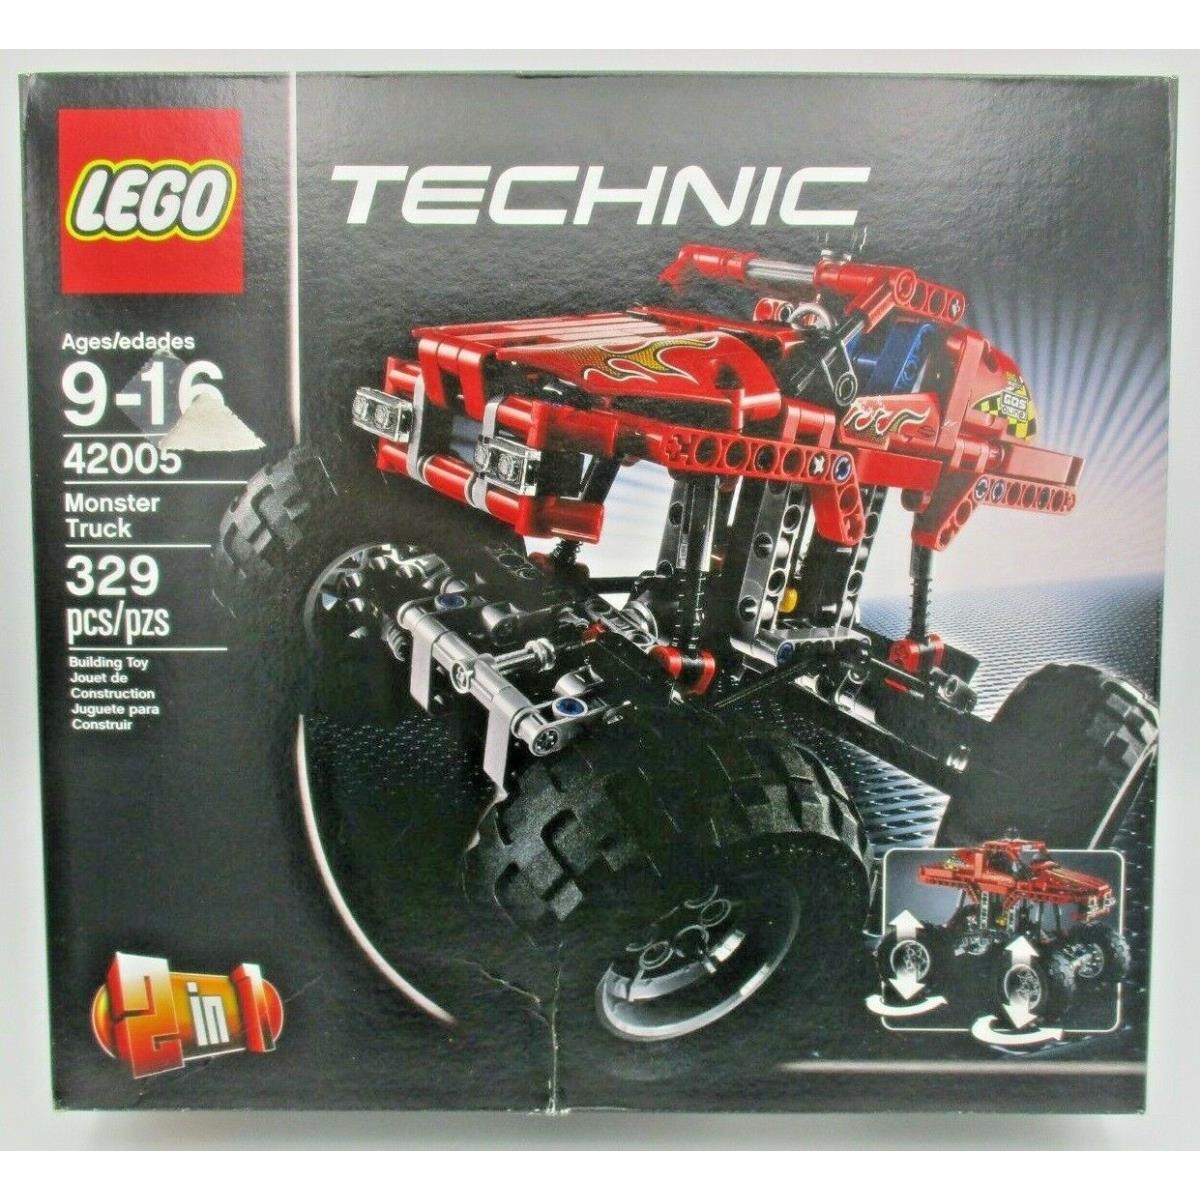 Lego Technic Monster Truck / Buggy 42005 Retired Toy